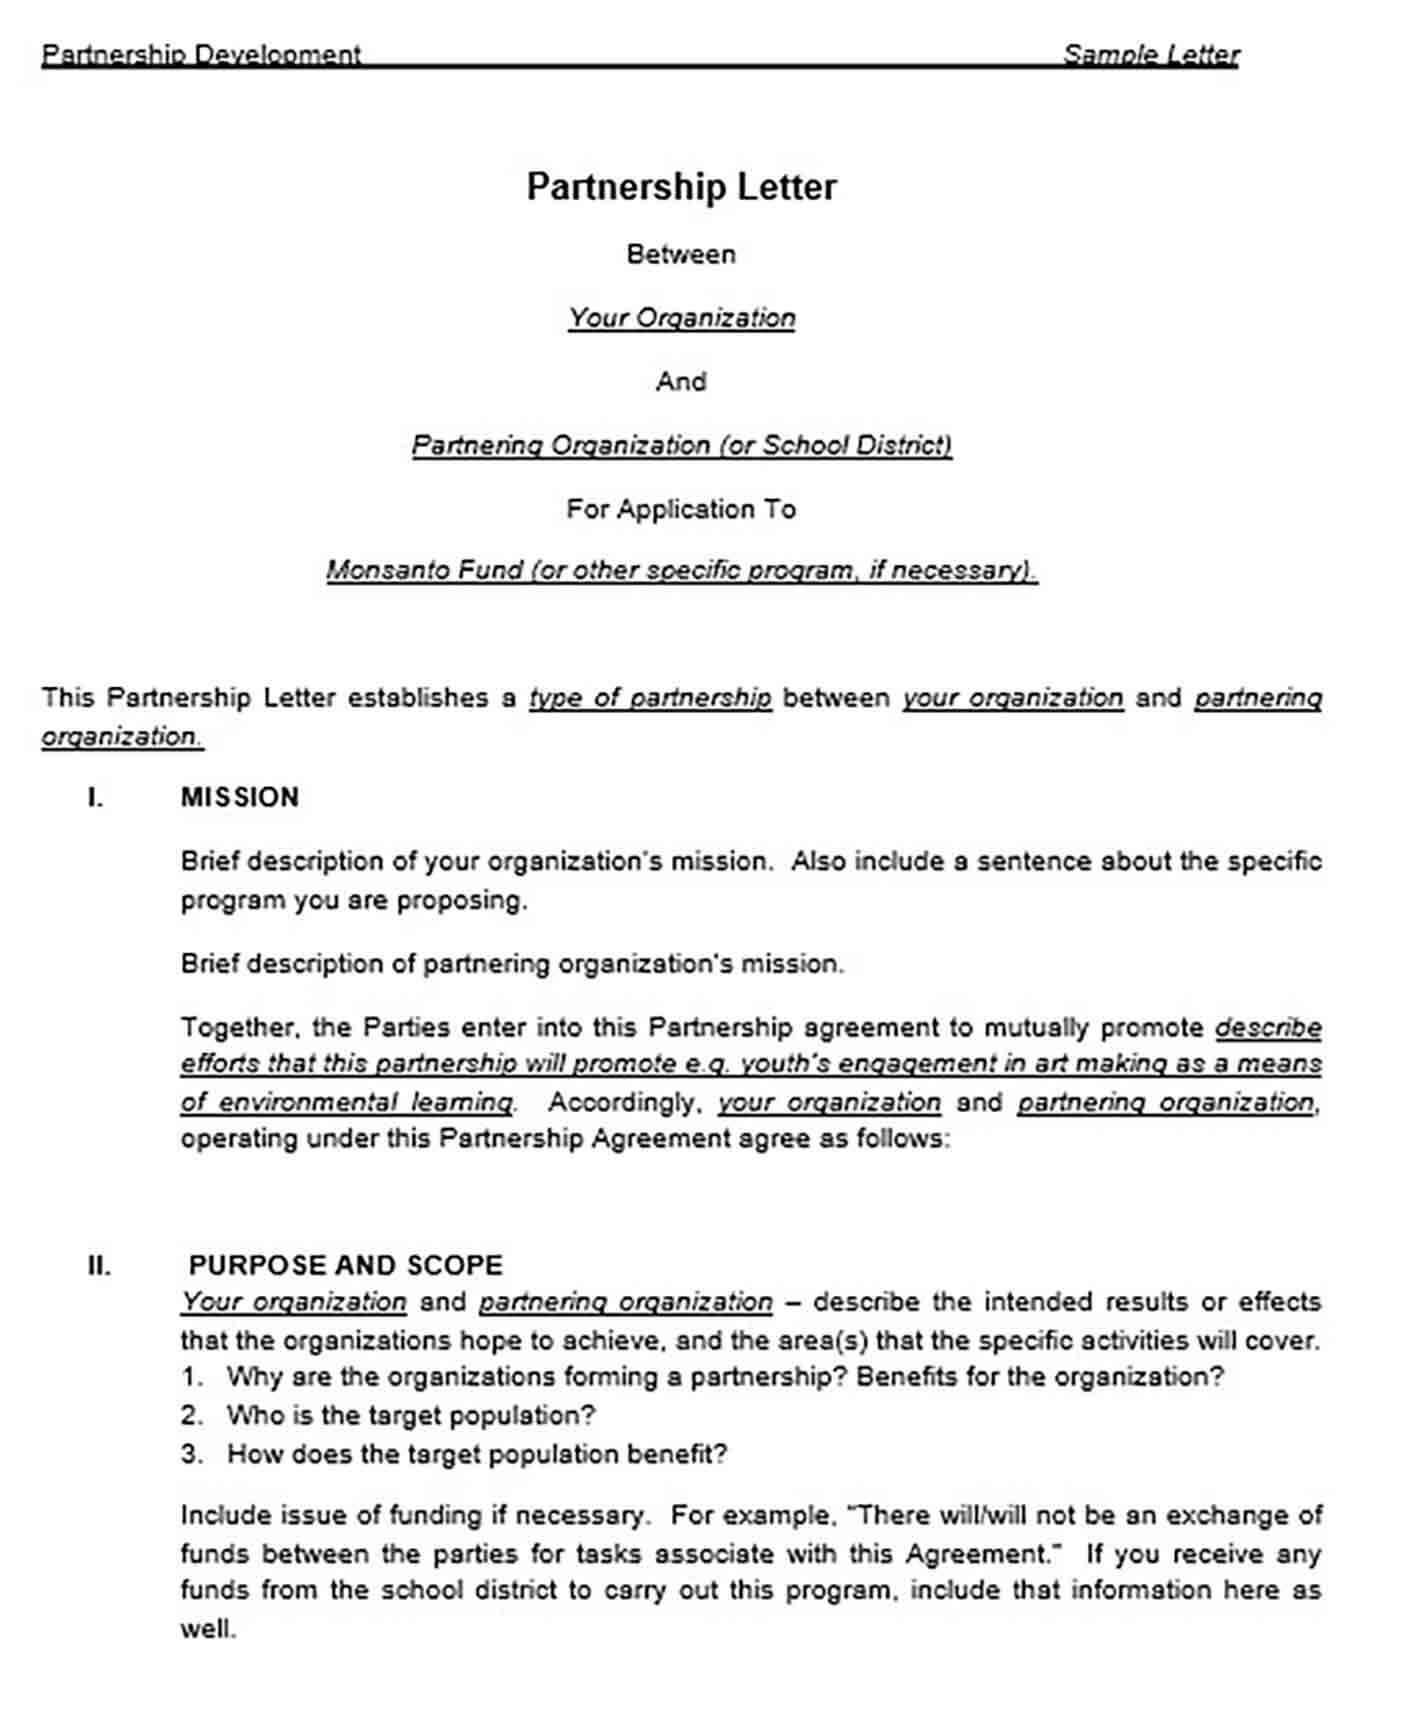 Strategic Partnership Proposal Letter DOC